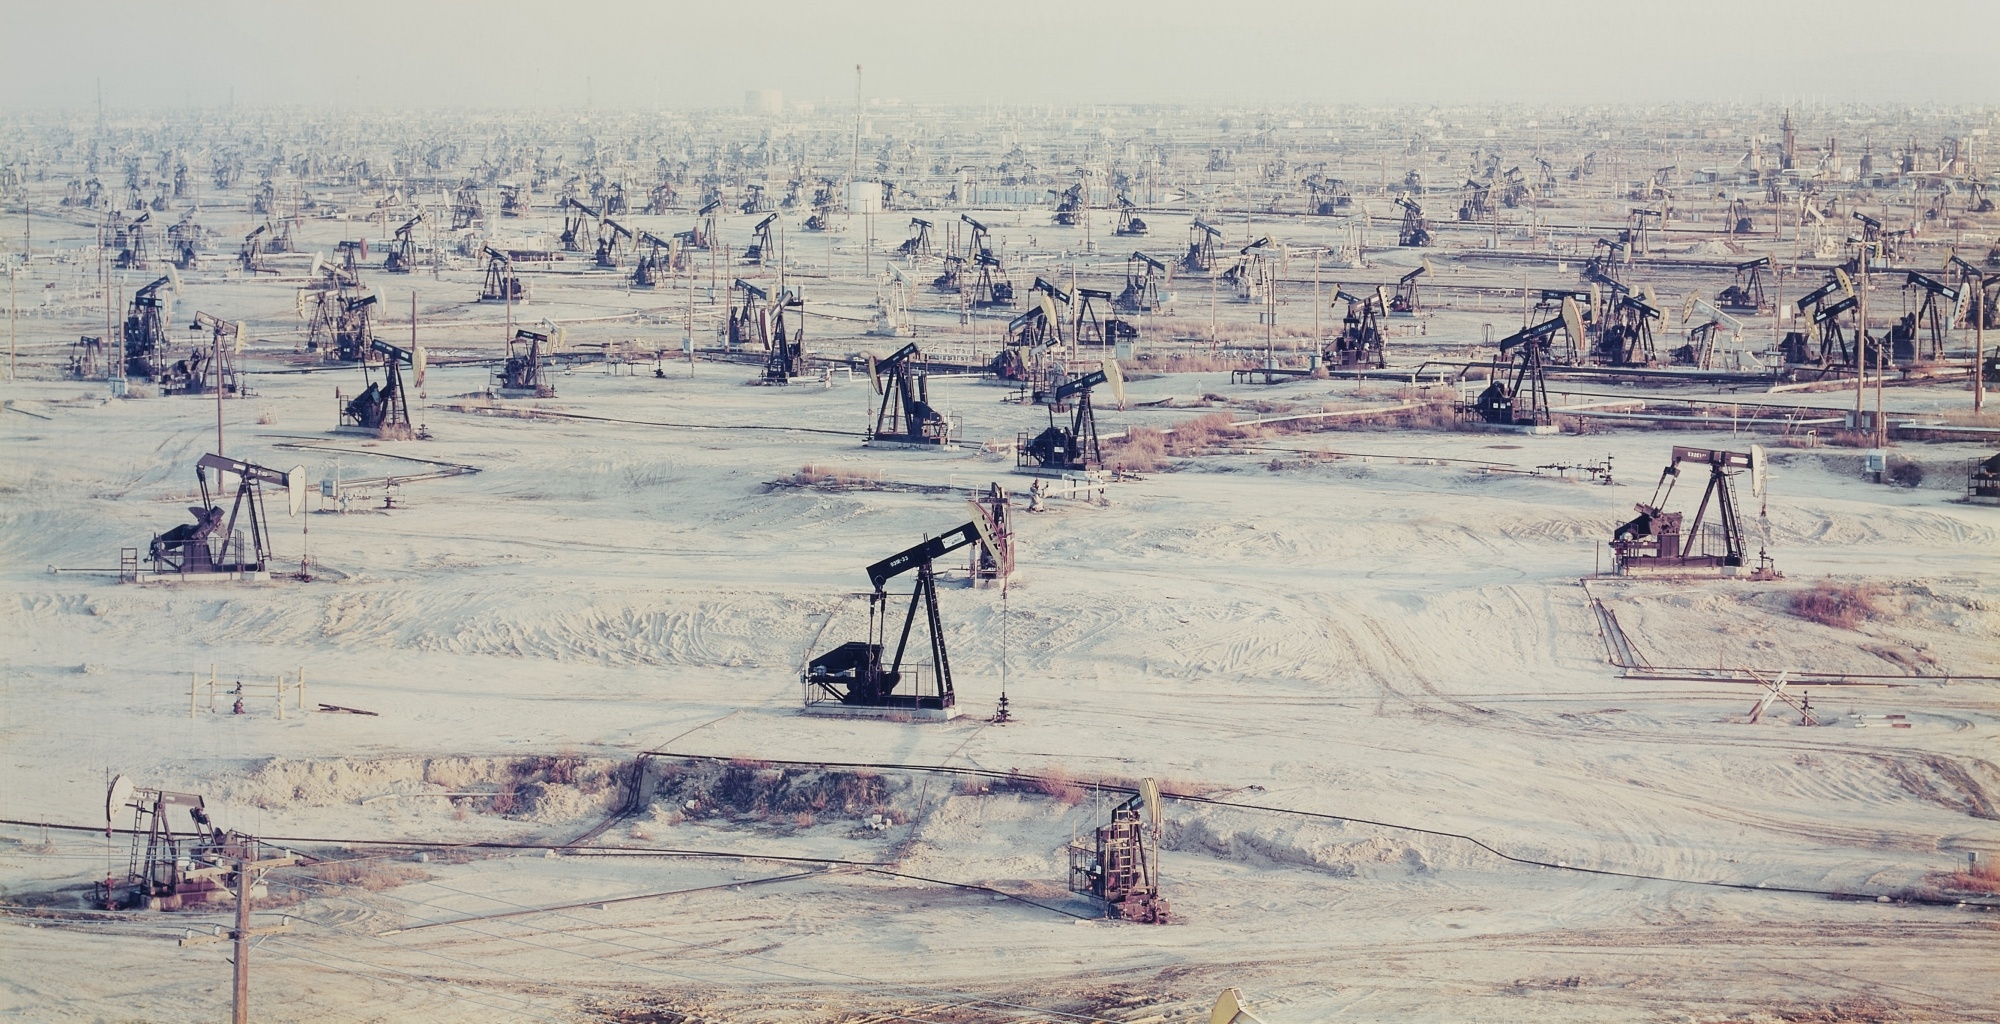 Oil Fields #1, Belridge, California by Edward Burtynsky, Executed in 2002